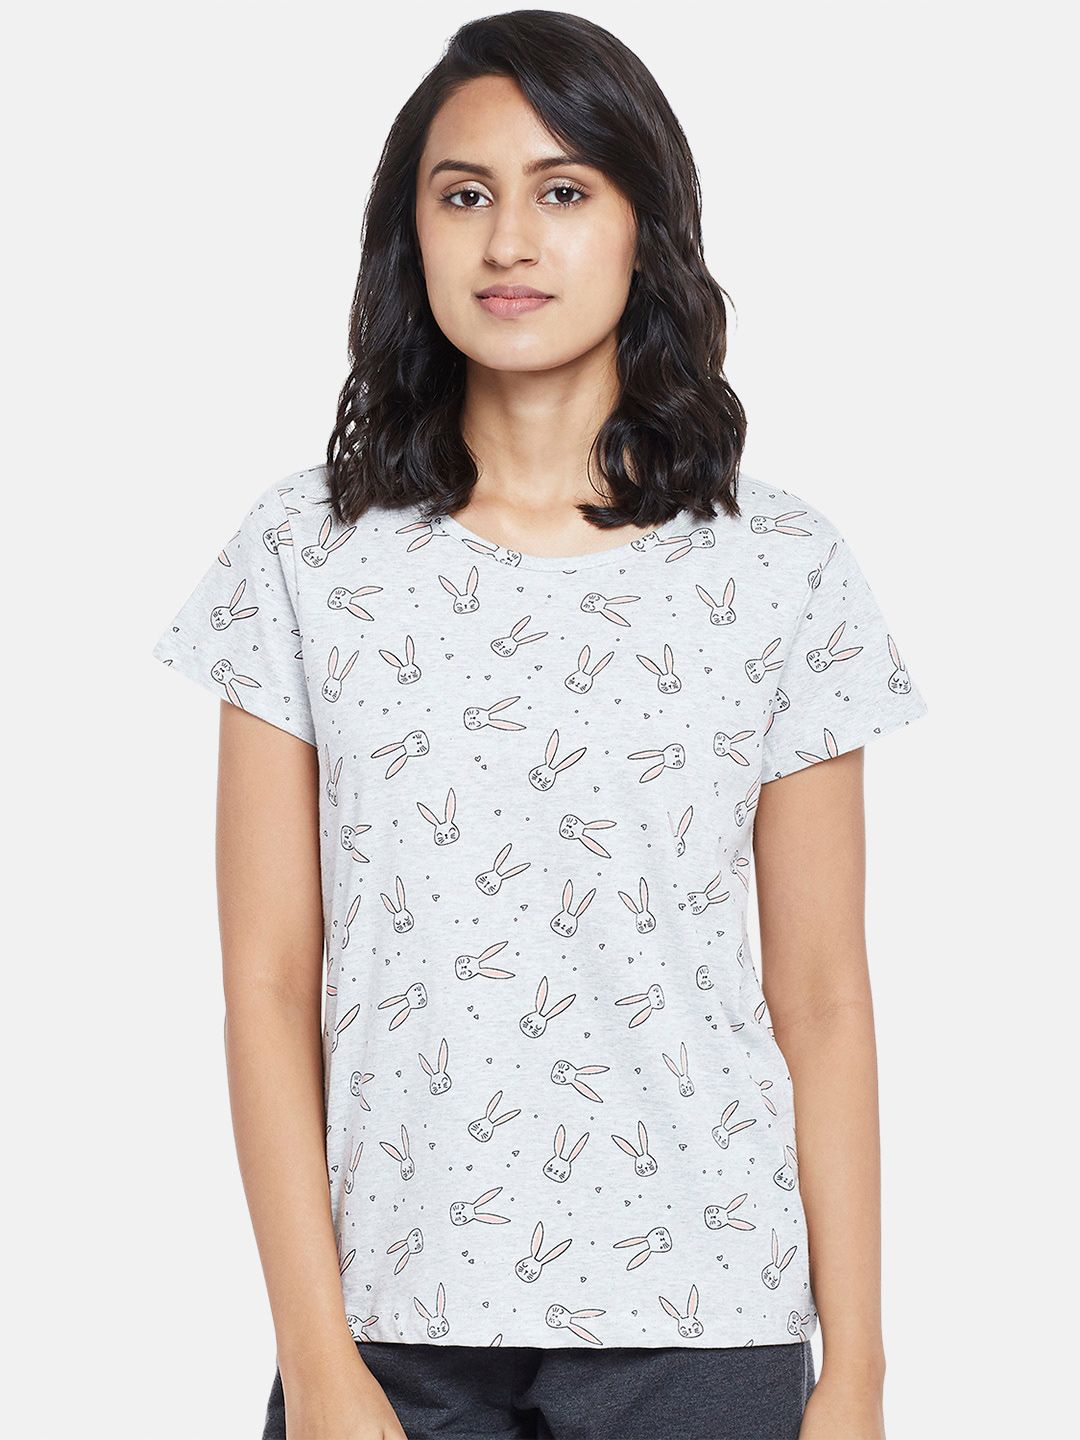 Dreamz by Pantaloons Women Grey & Black Conversational Printed Cotton Lounge T-shirt Price in India